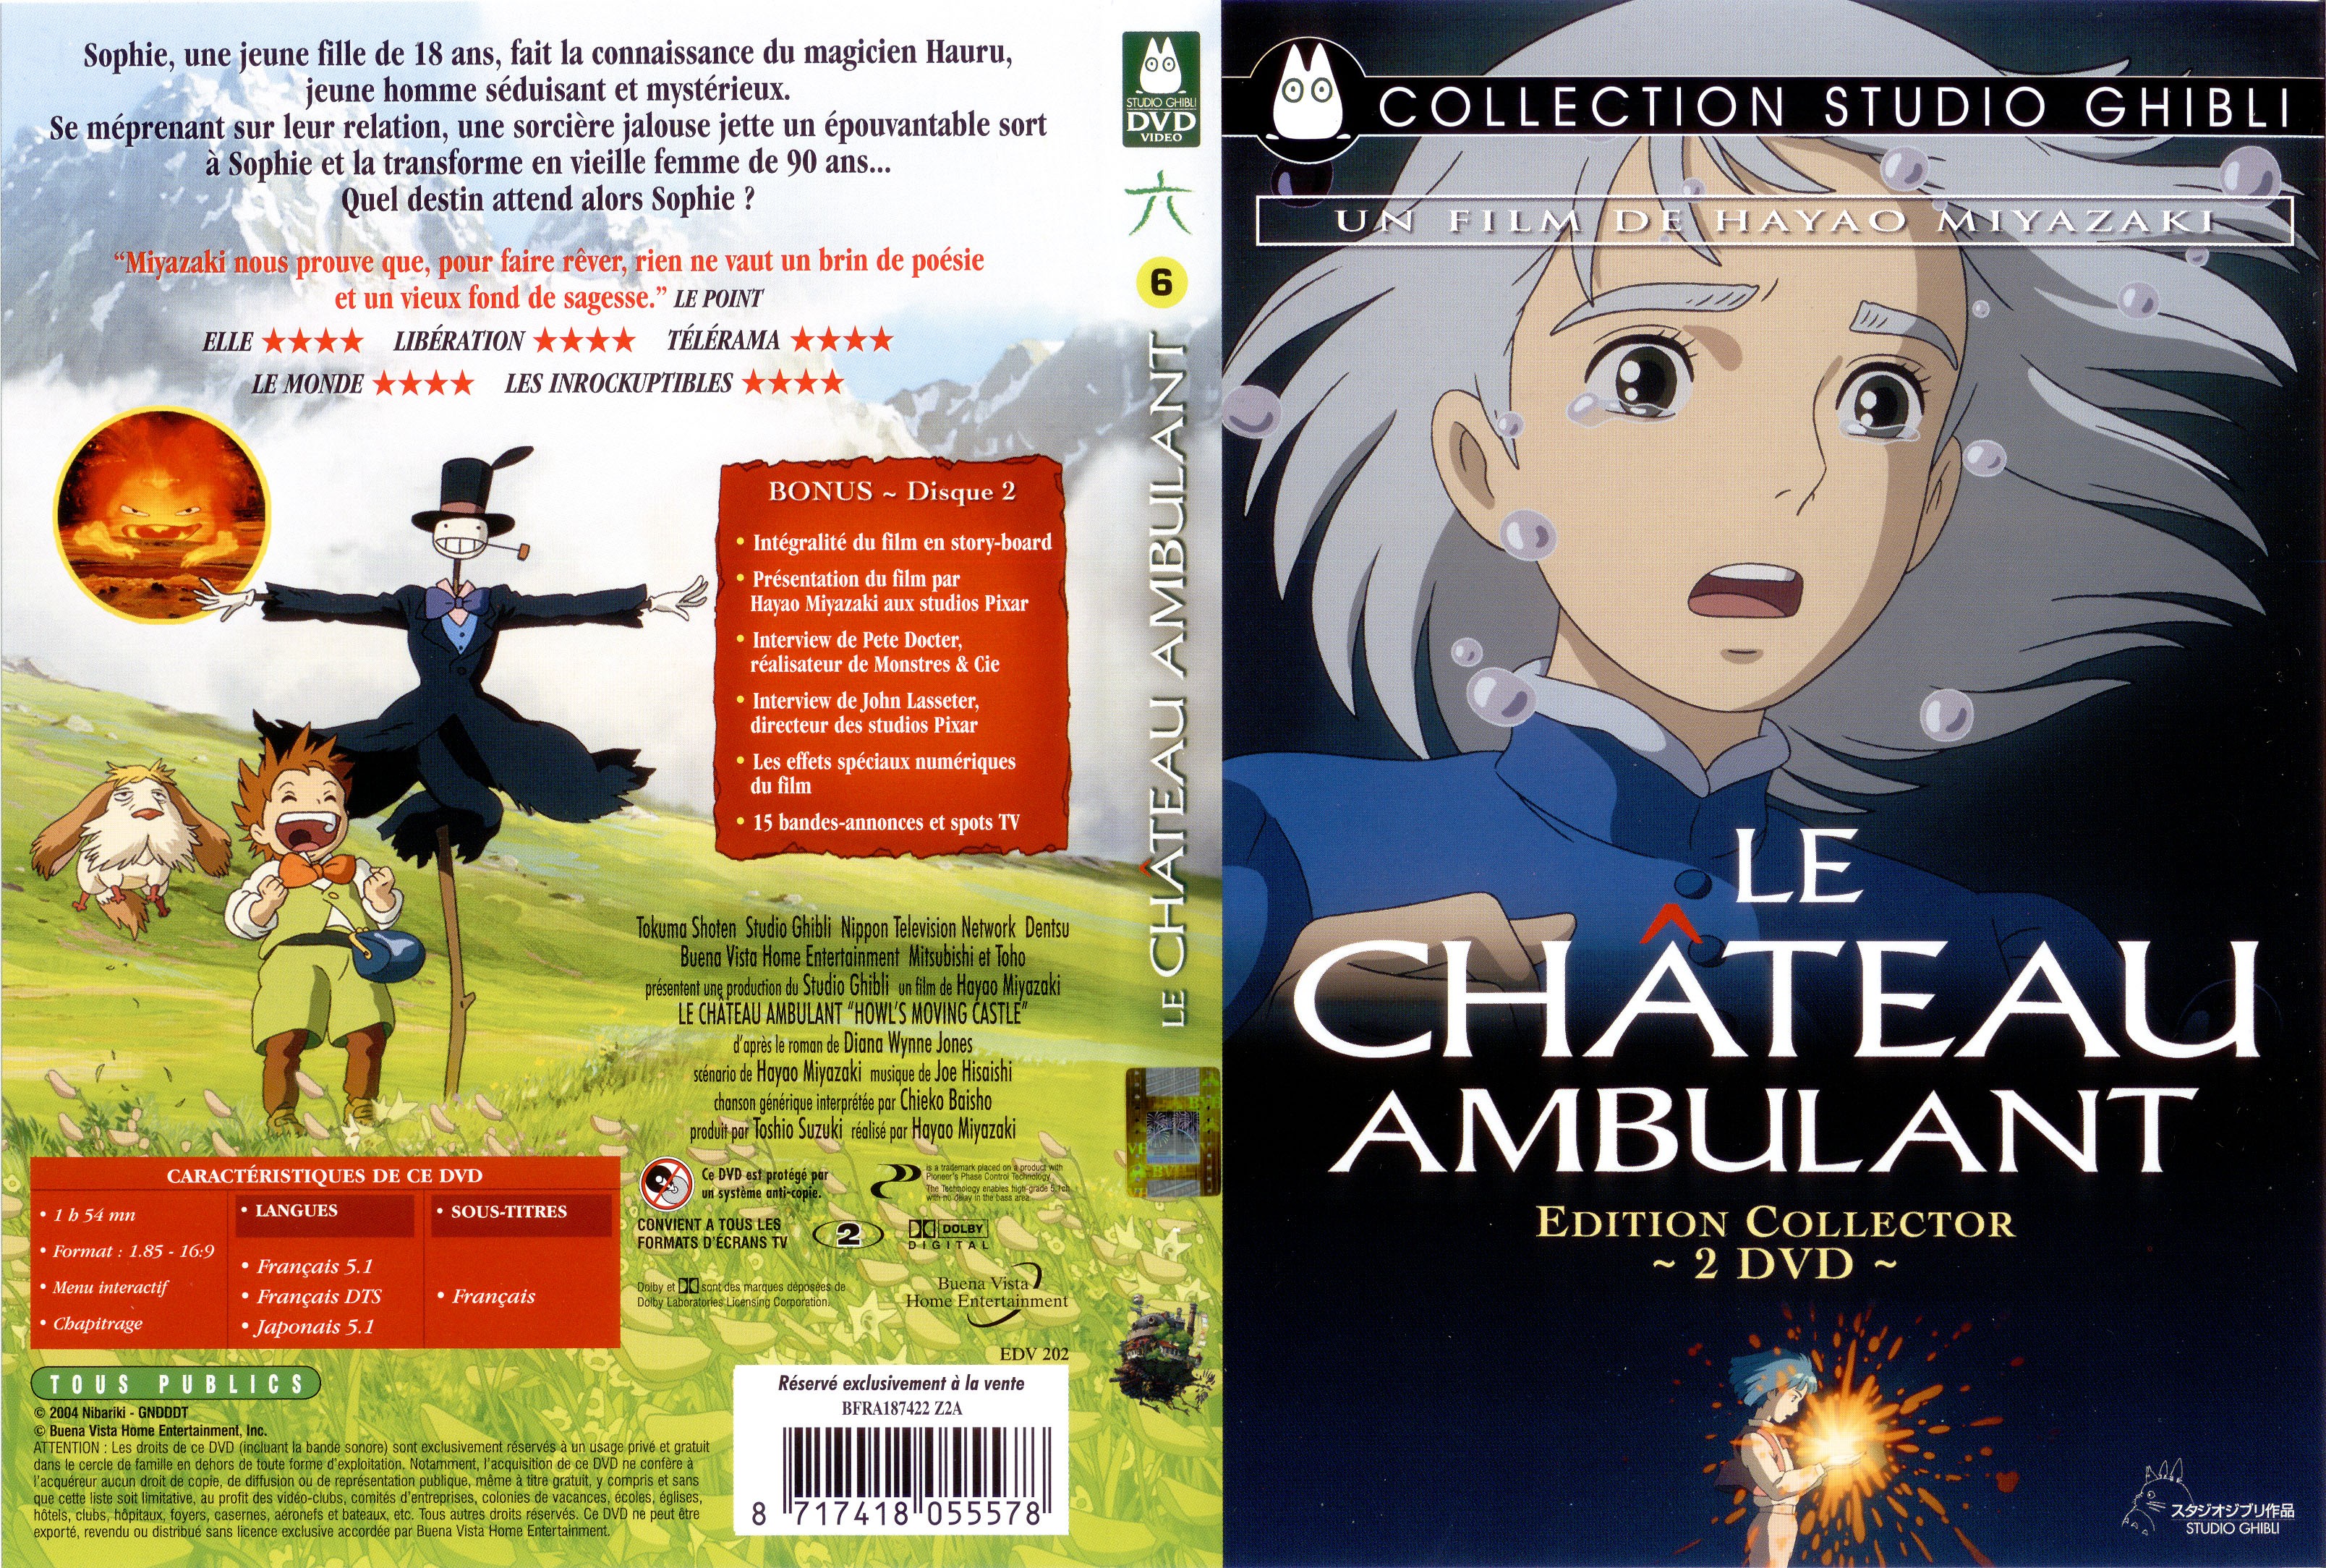 Jaquette DVD Le chateau ambulant v2